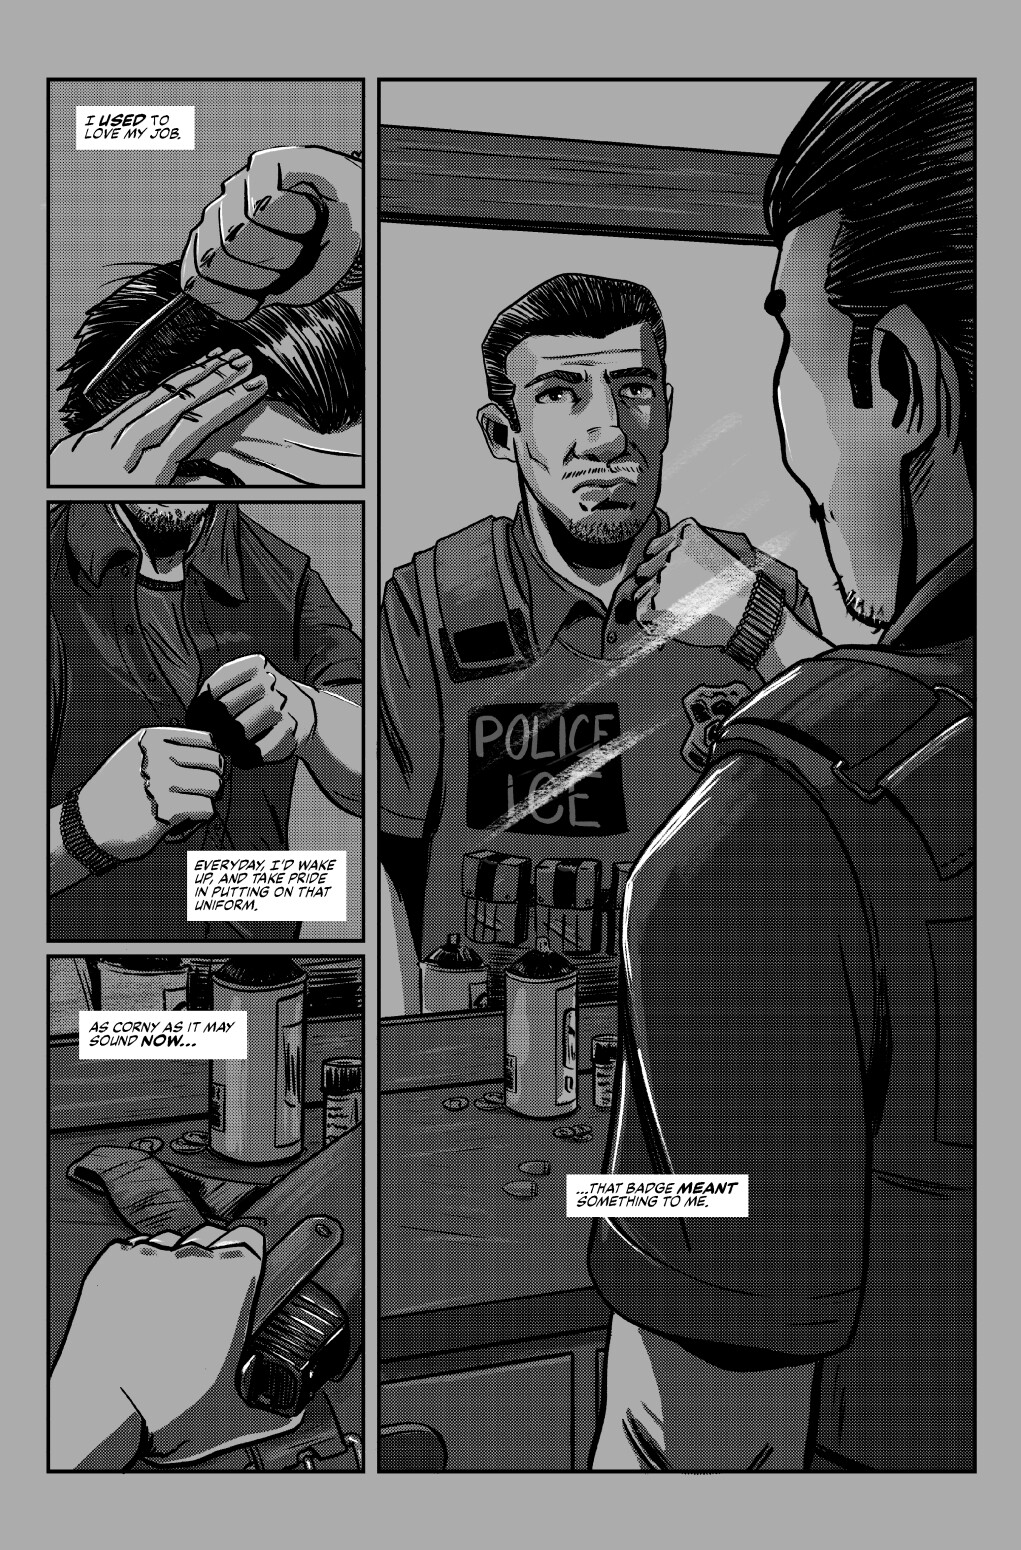 Sincerely, Agent Mejía: Page 1